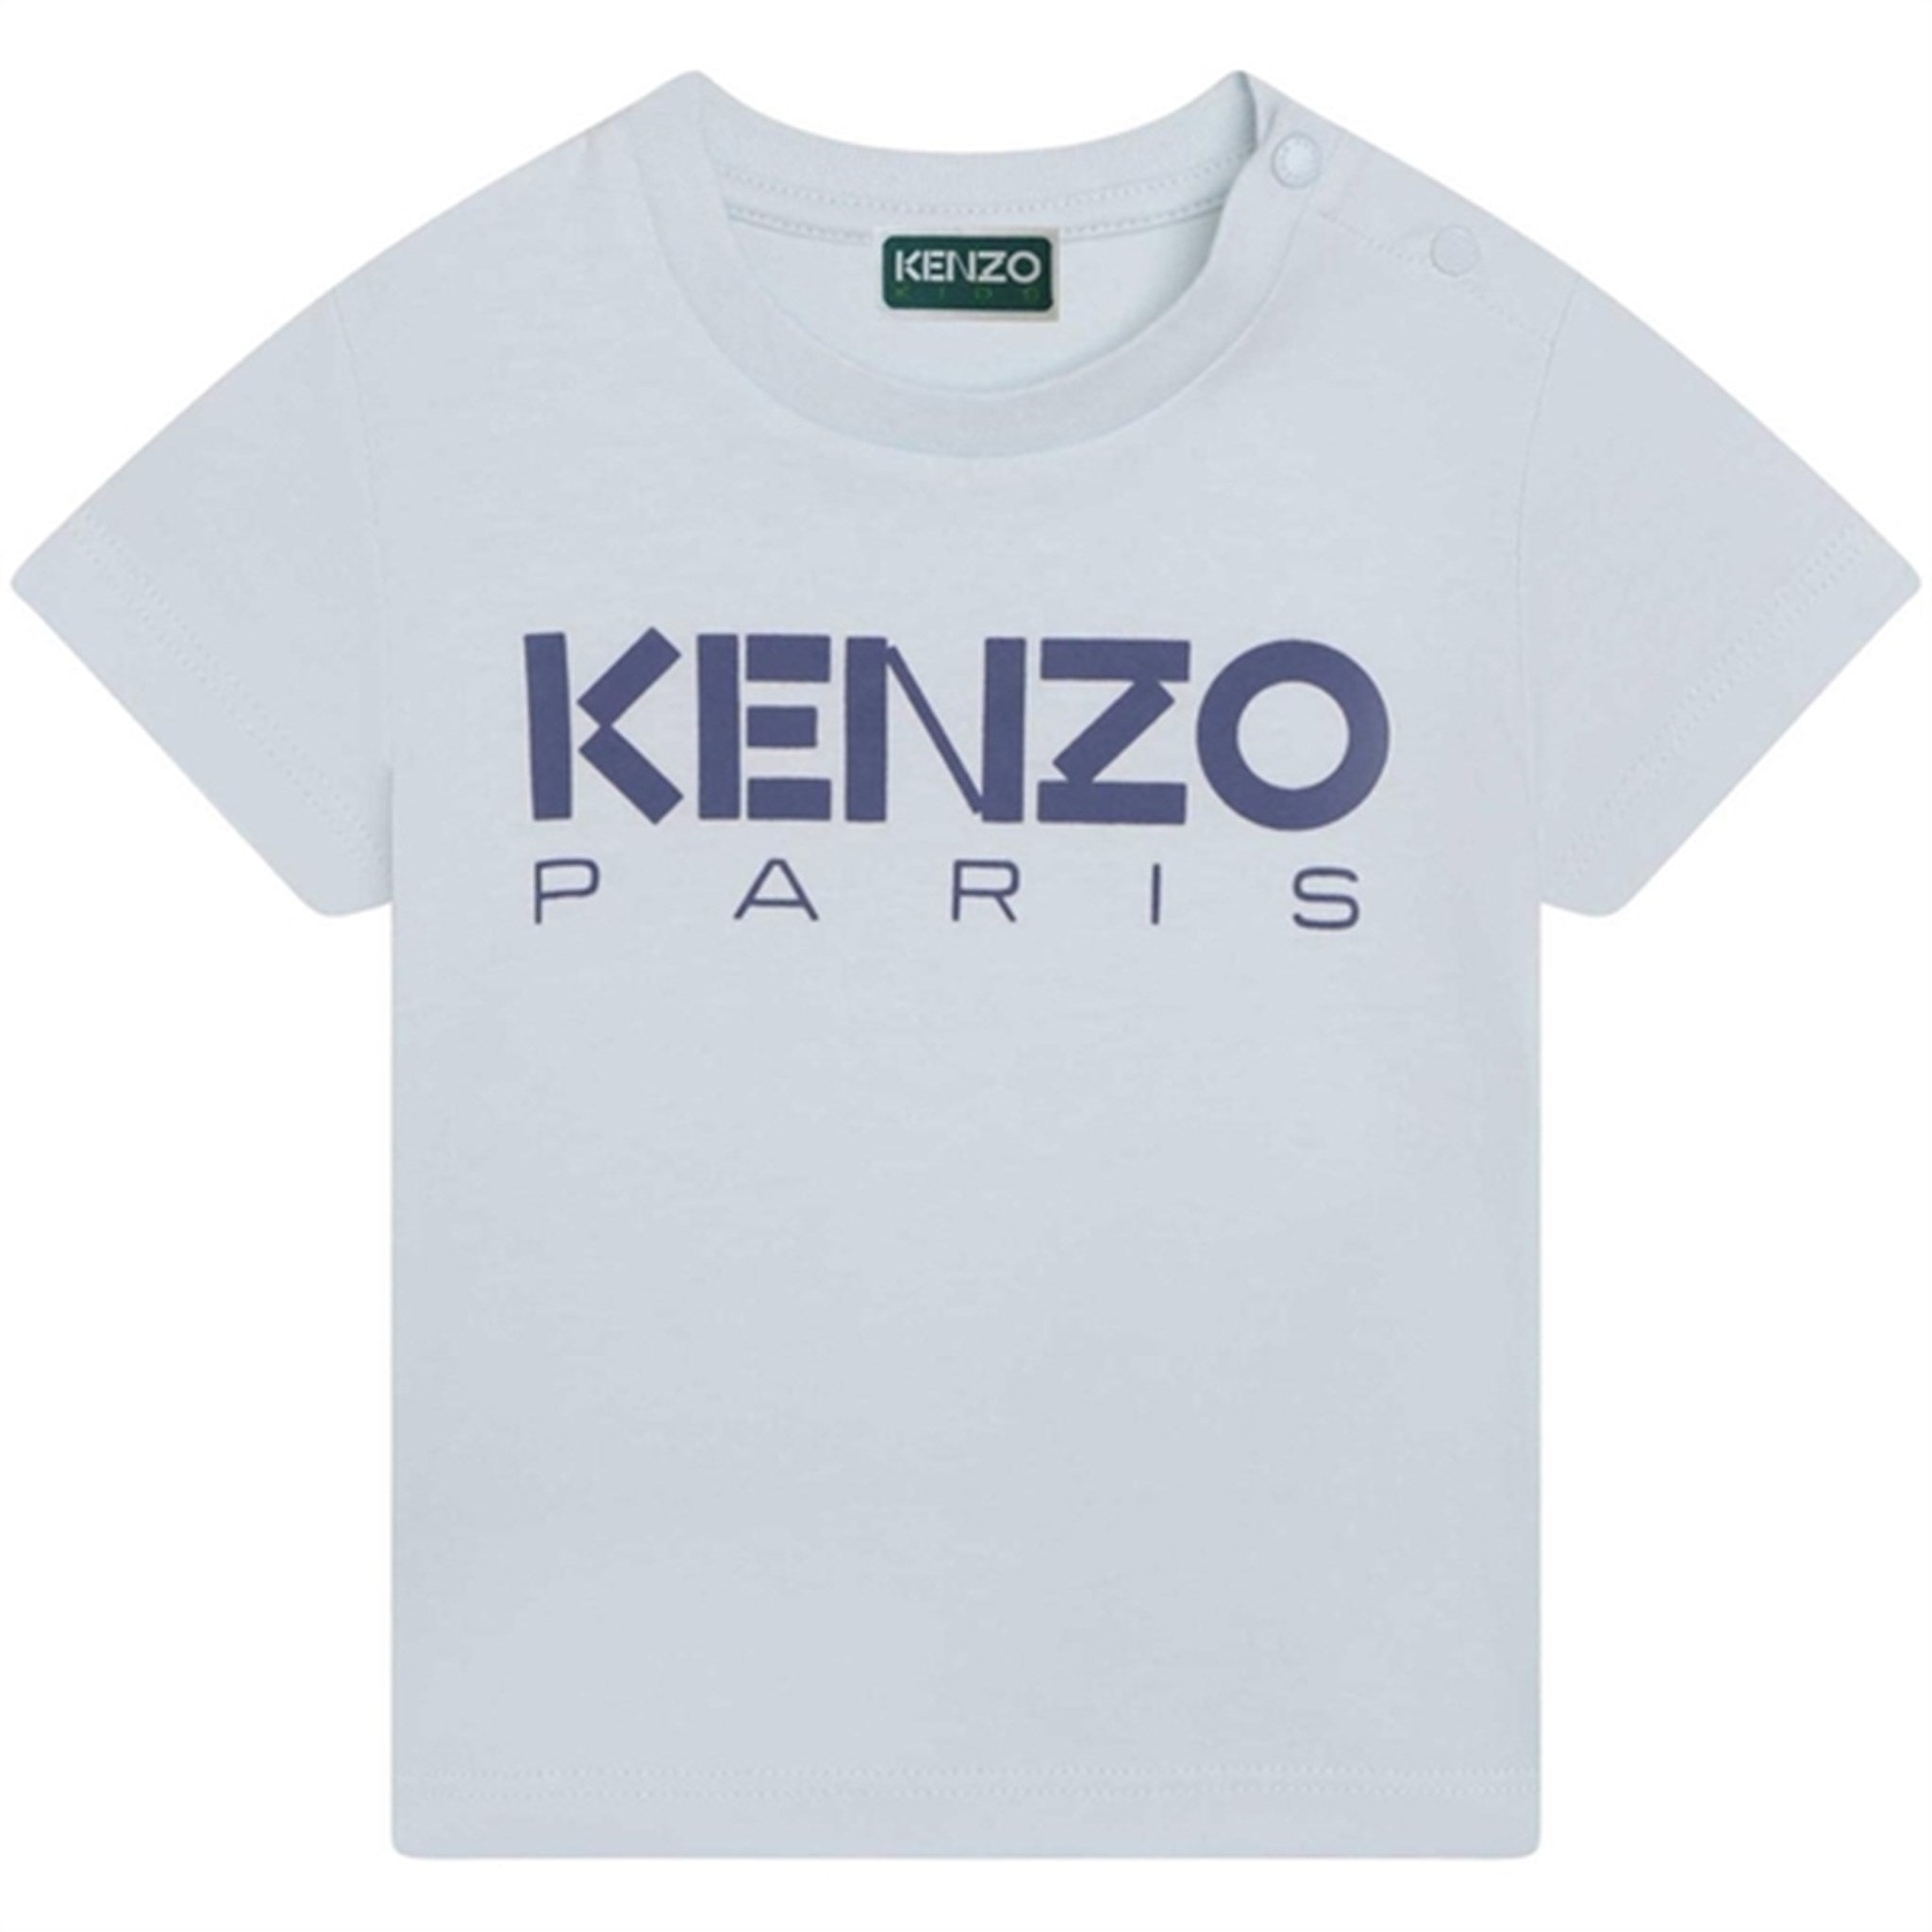 Kenzo Bebis T-shirt Pale Blue